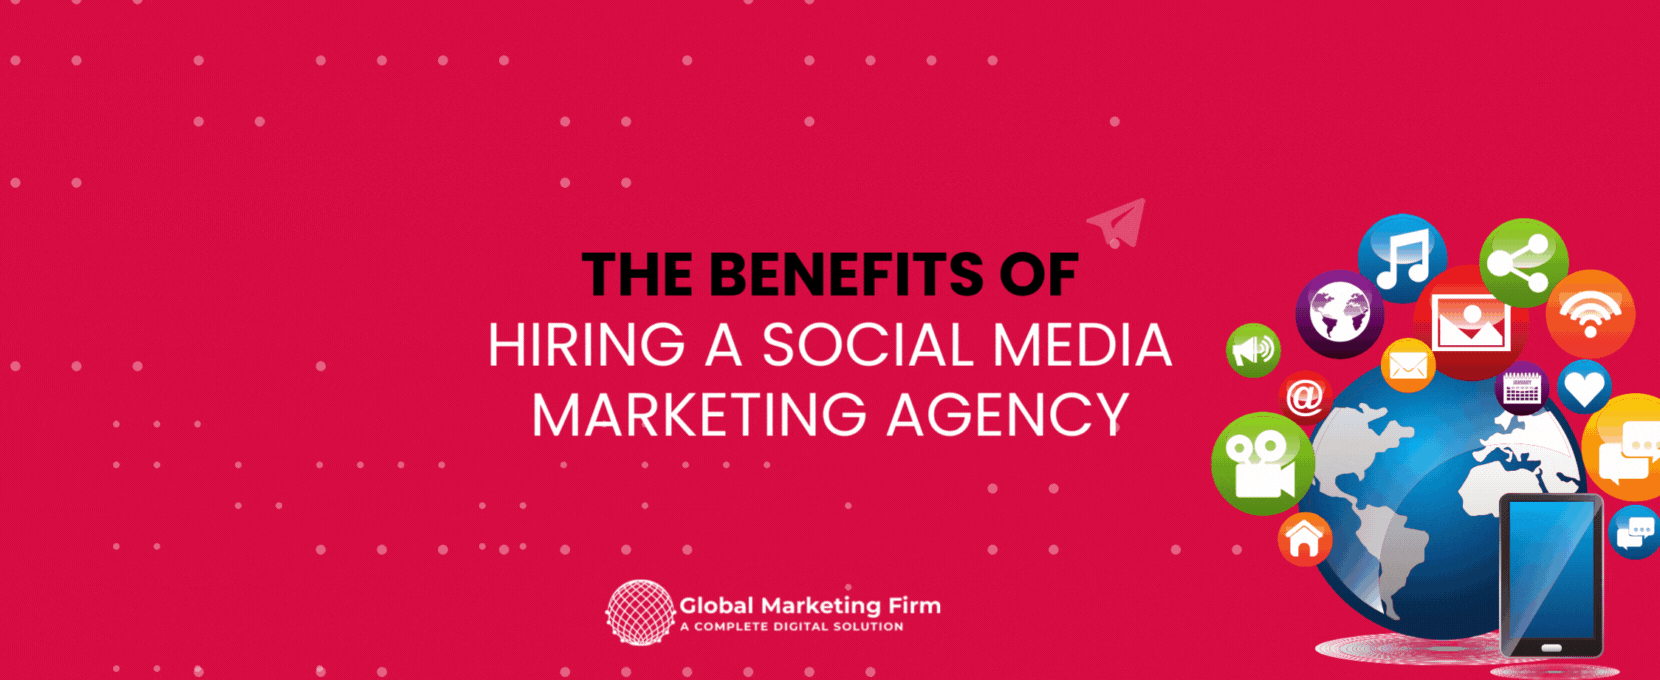 Social Media Marketing Agency Benefits